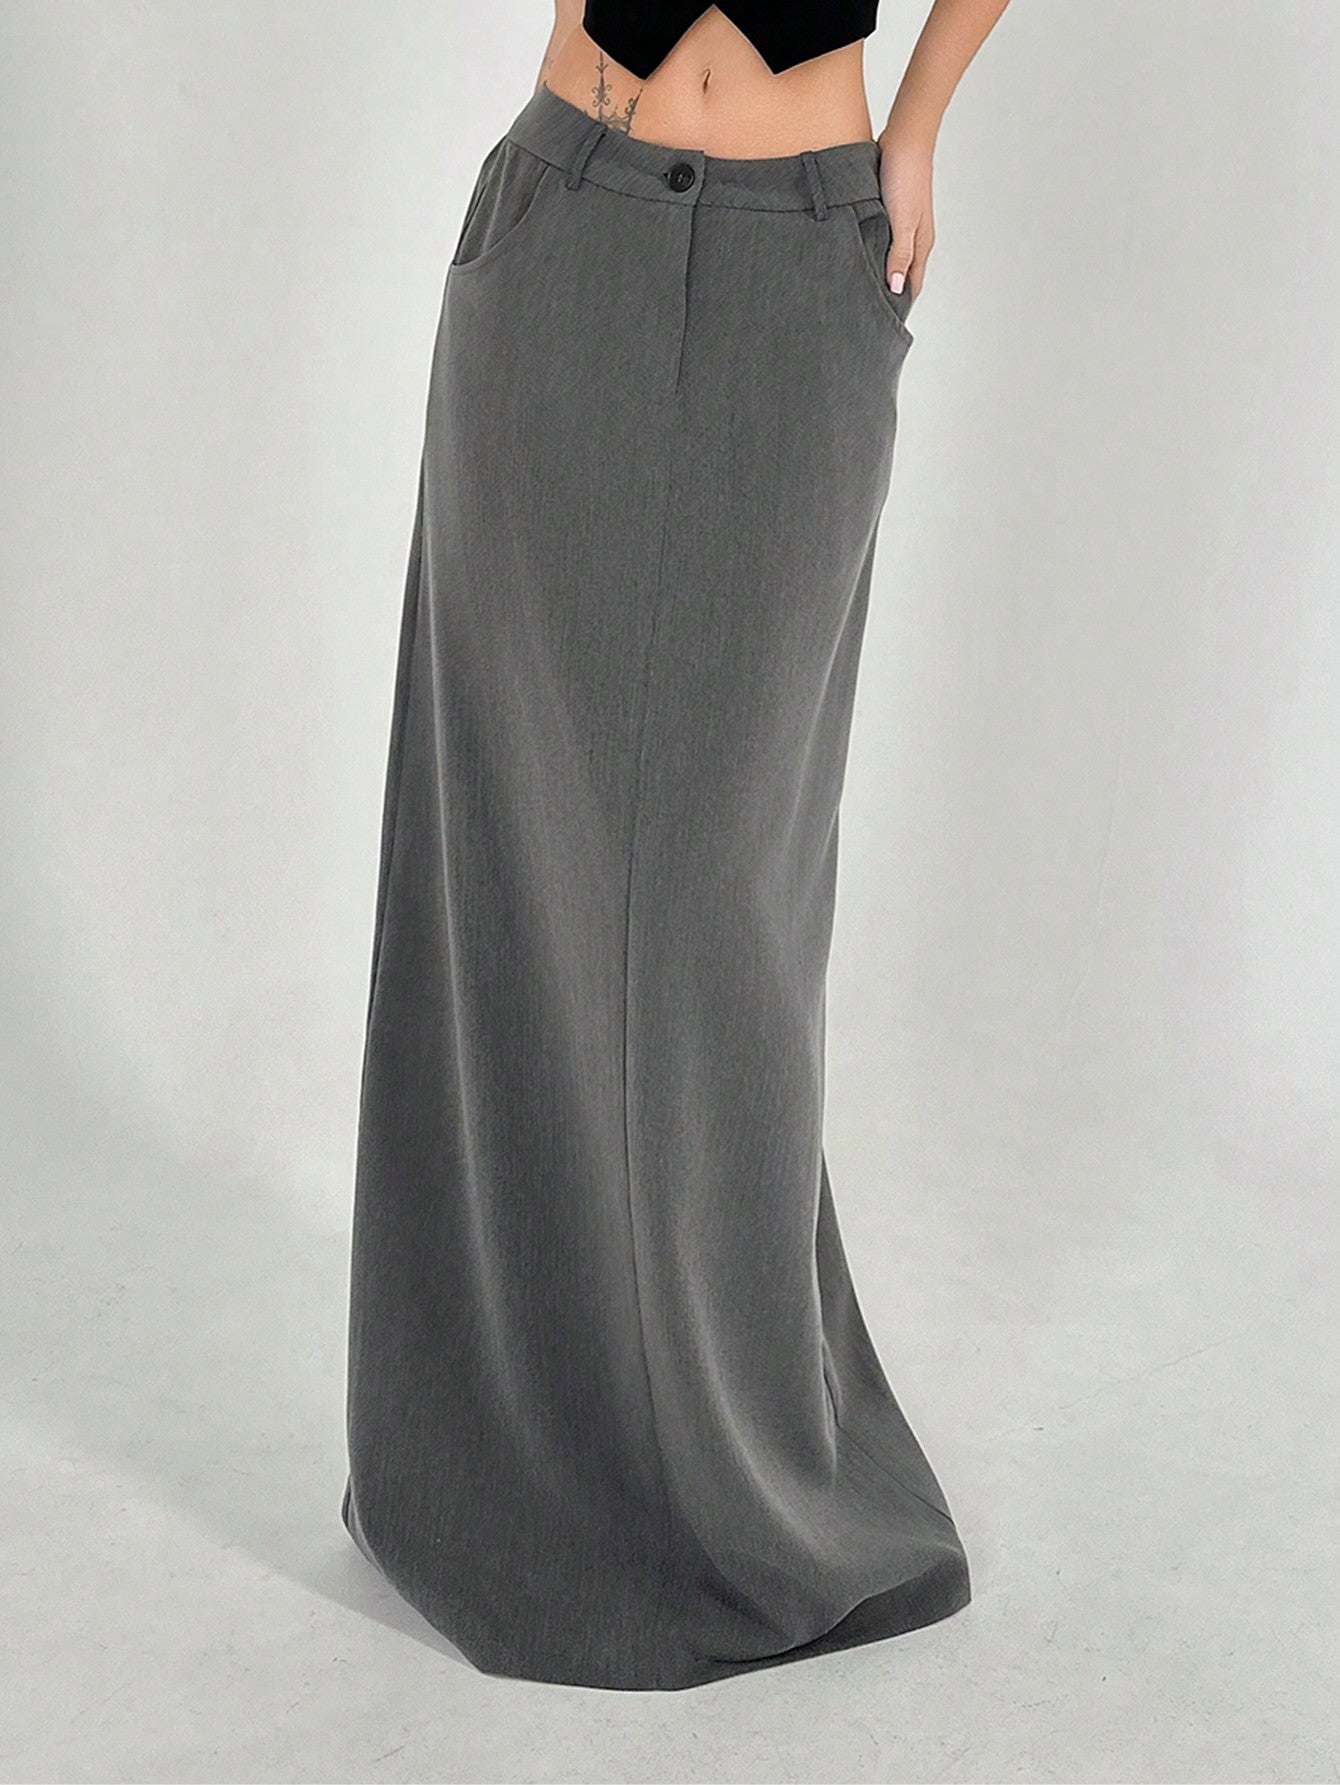 Women's Low Waist Gray Simple Streetwear Skirt With Pockets